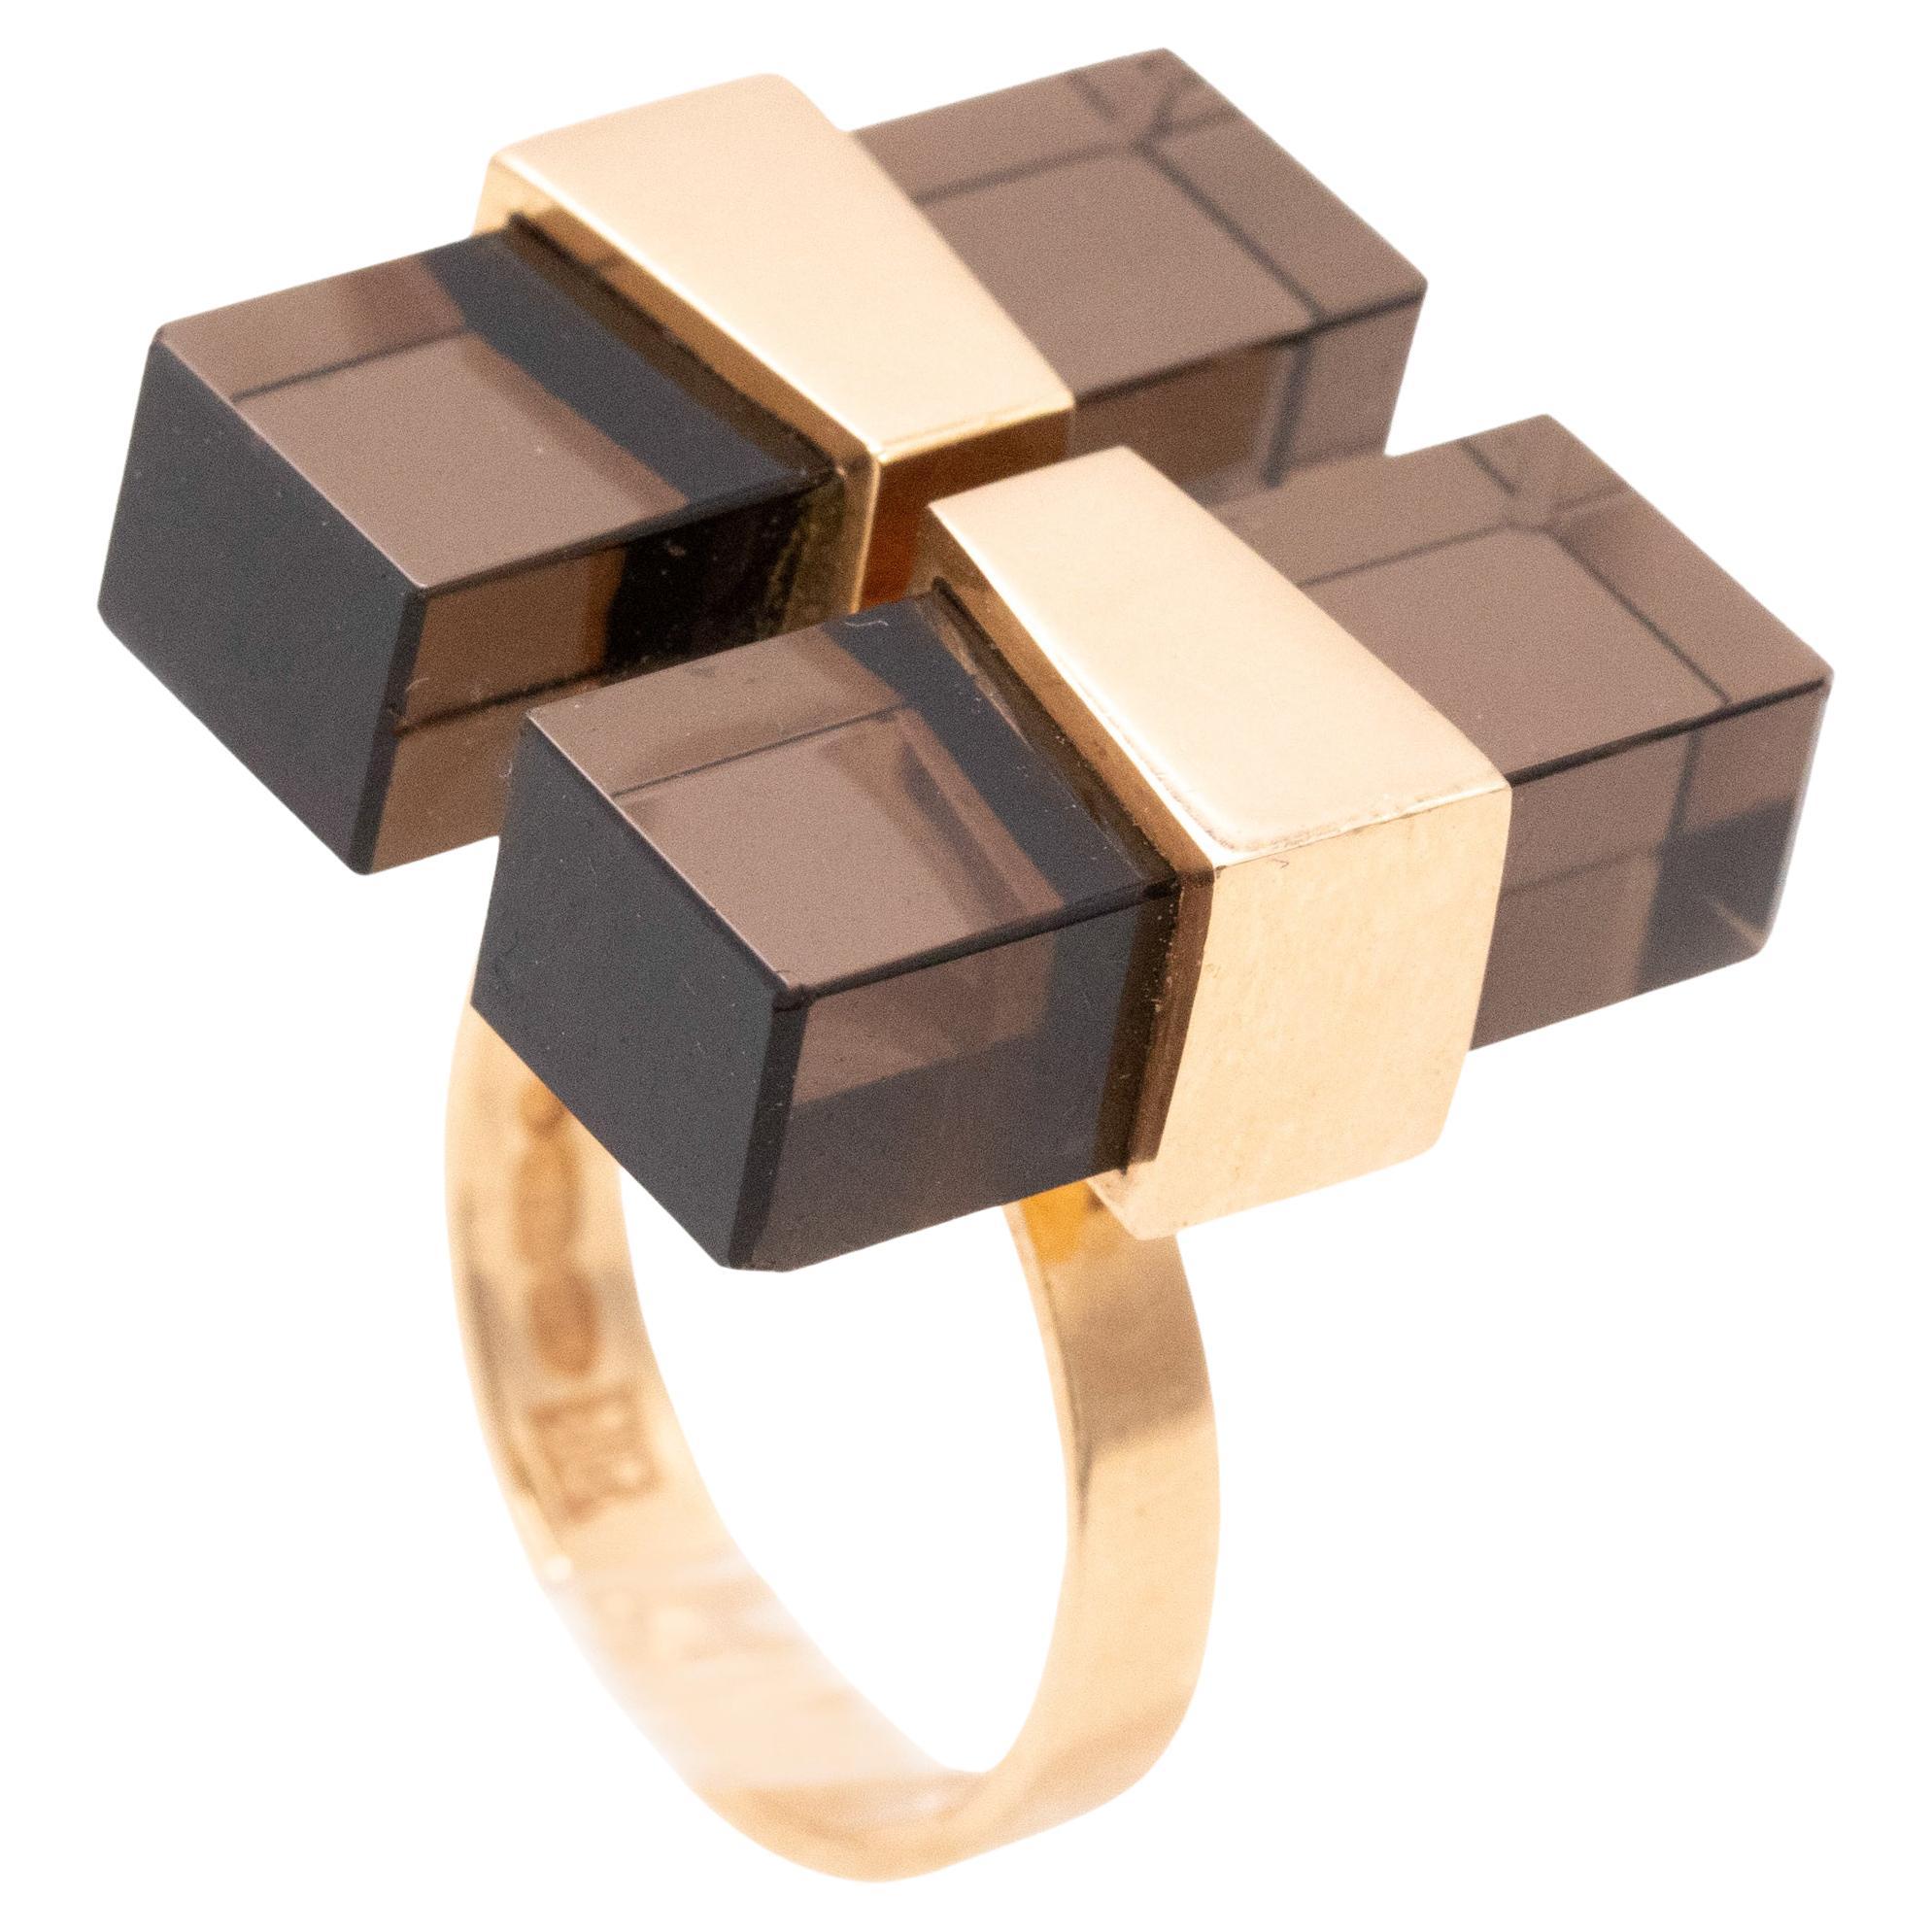 Kaunis Koru 1973 Finland Sculptural Geometric Ring 14Kt Gold Smokey Quartz For Sale